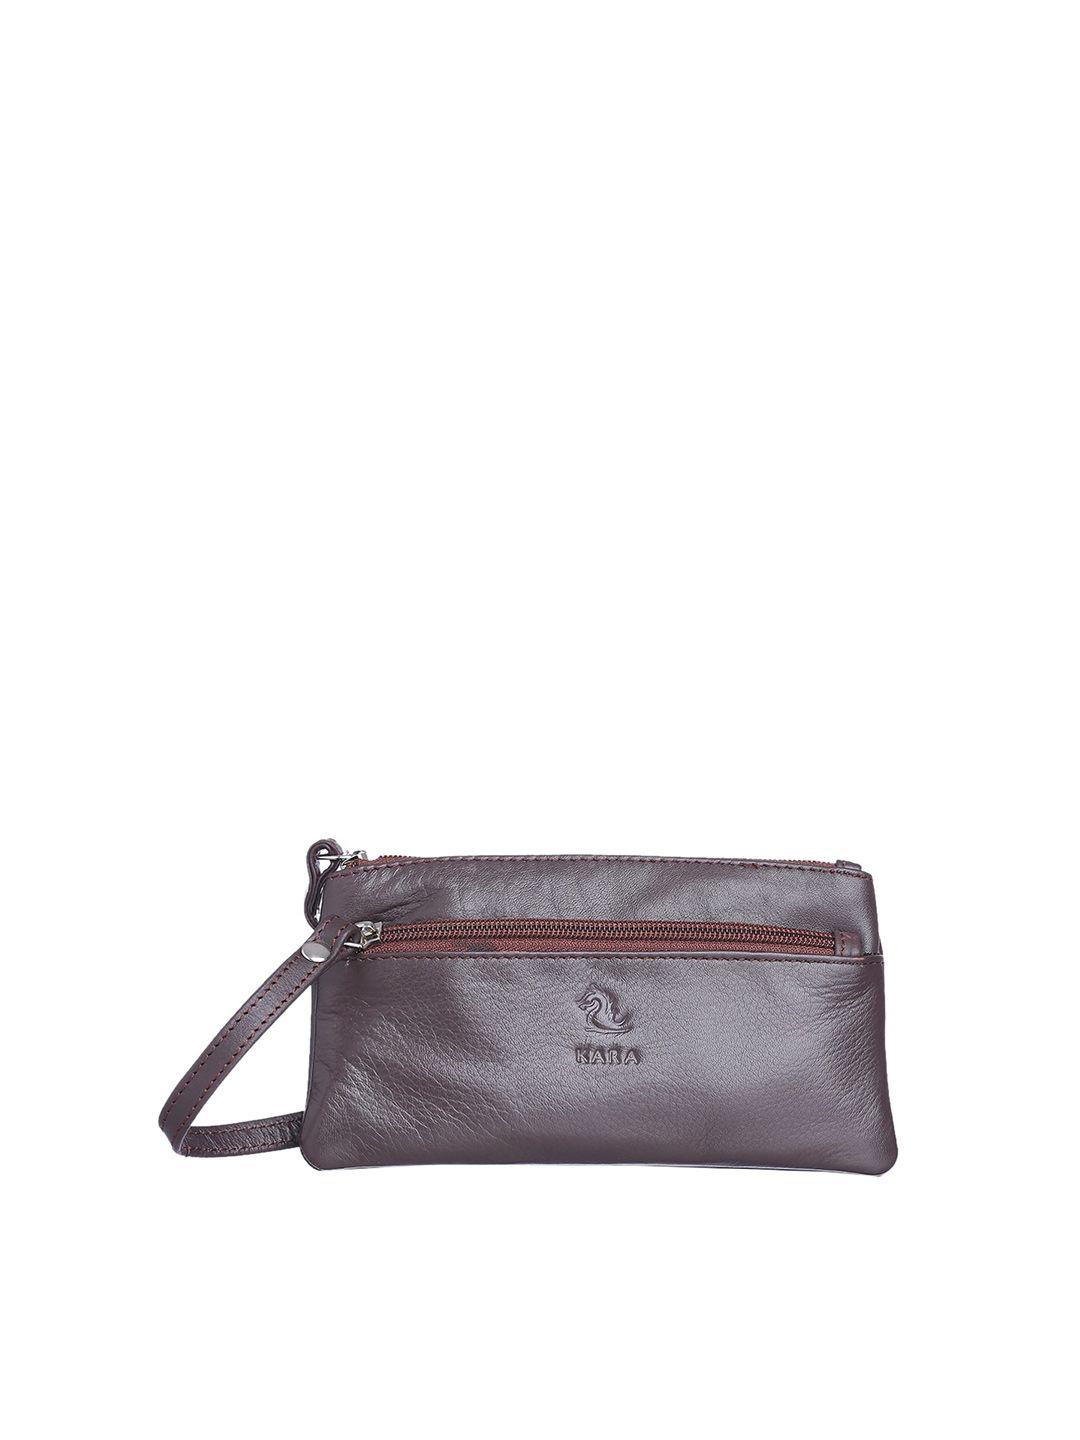 kara leather purse clutch